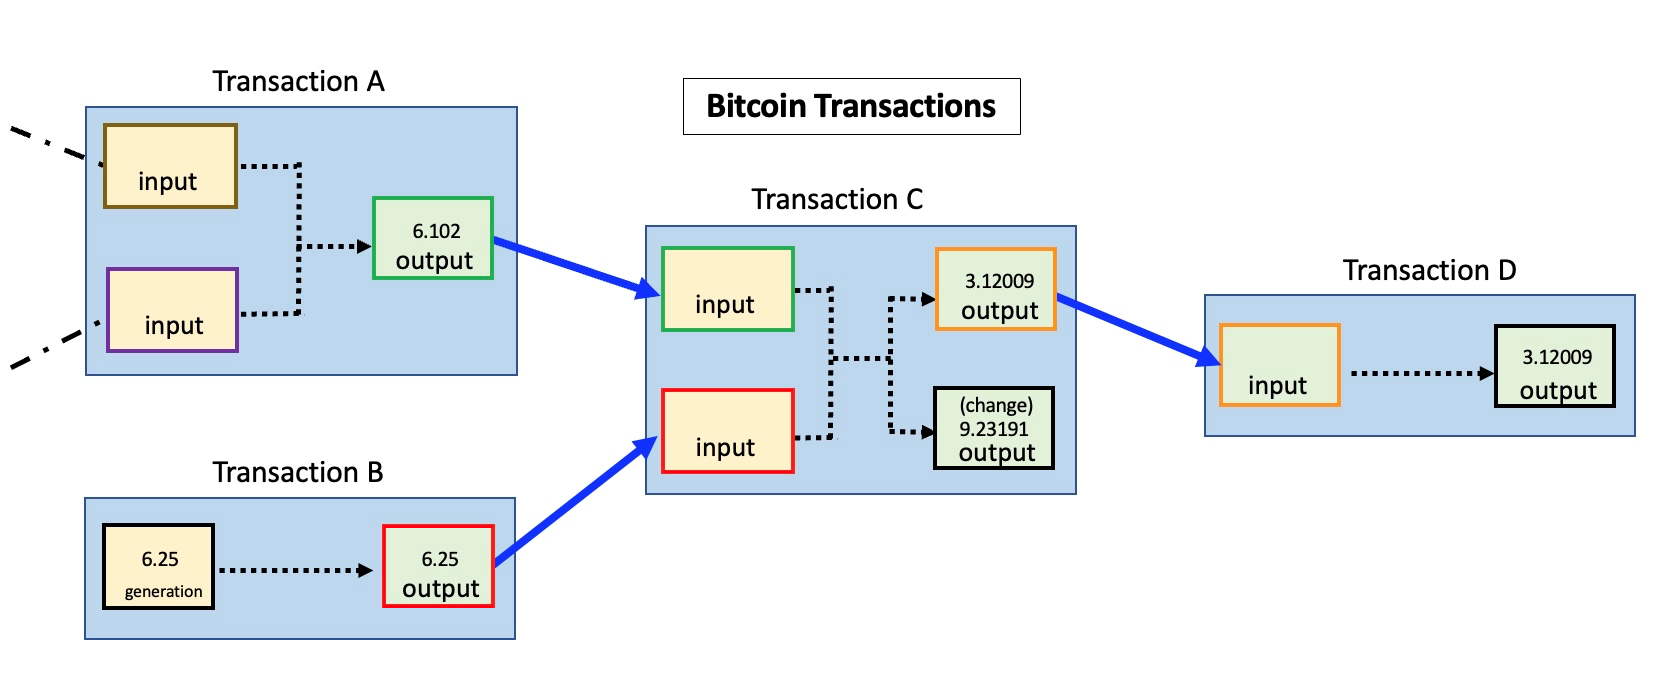 A schematic diagram that illustrates Bitcoin transactons